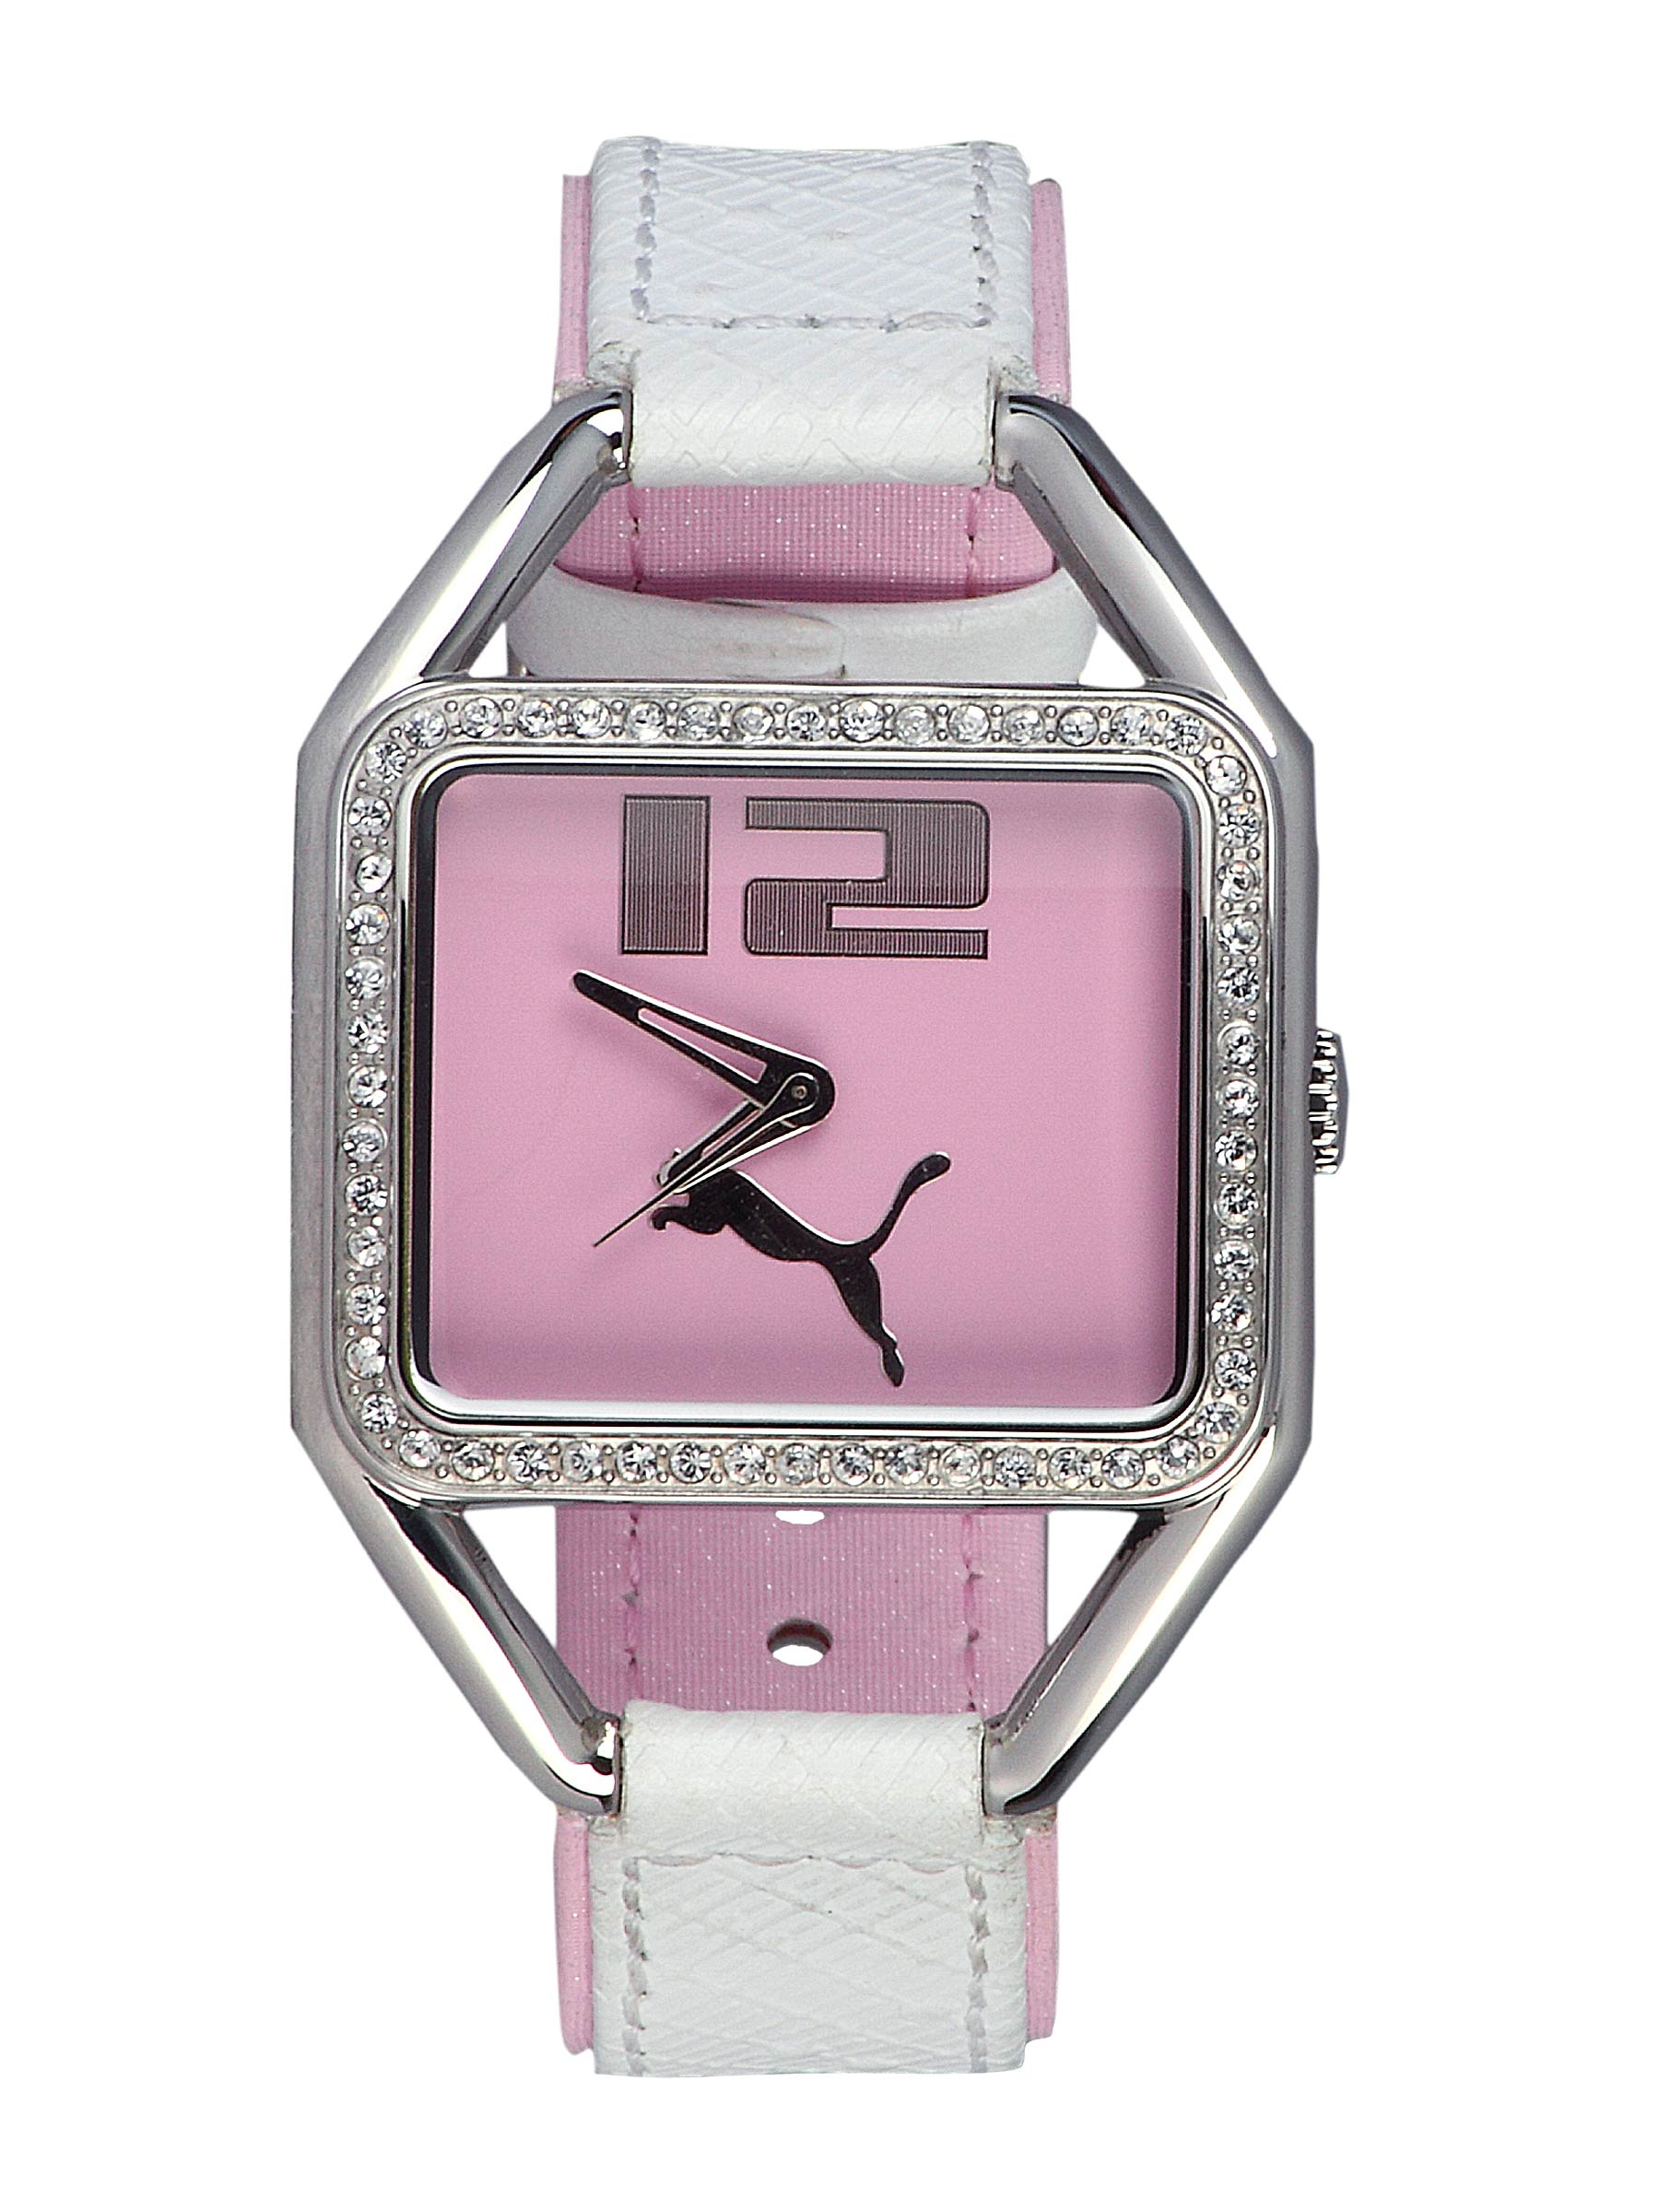 Puma Women Pliancy 199 Pink Watches